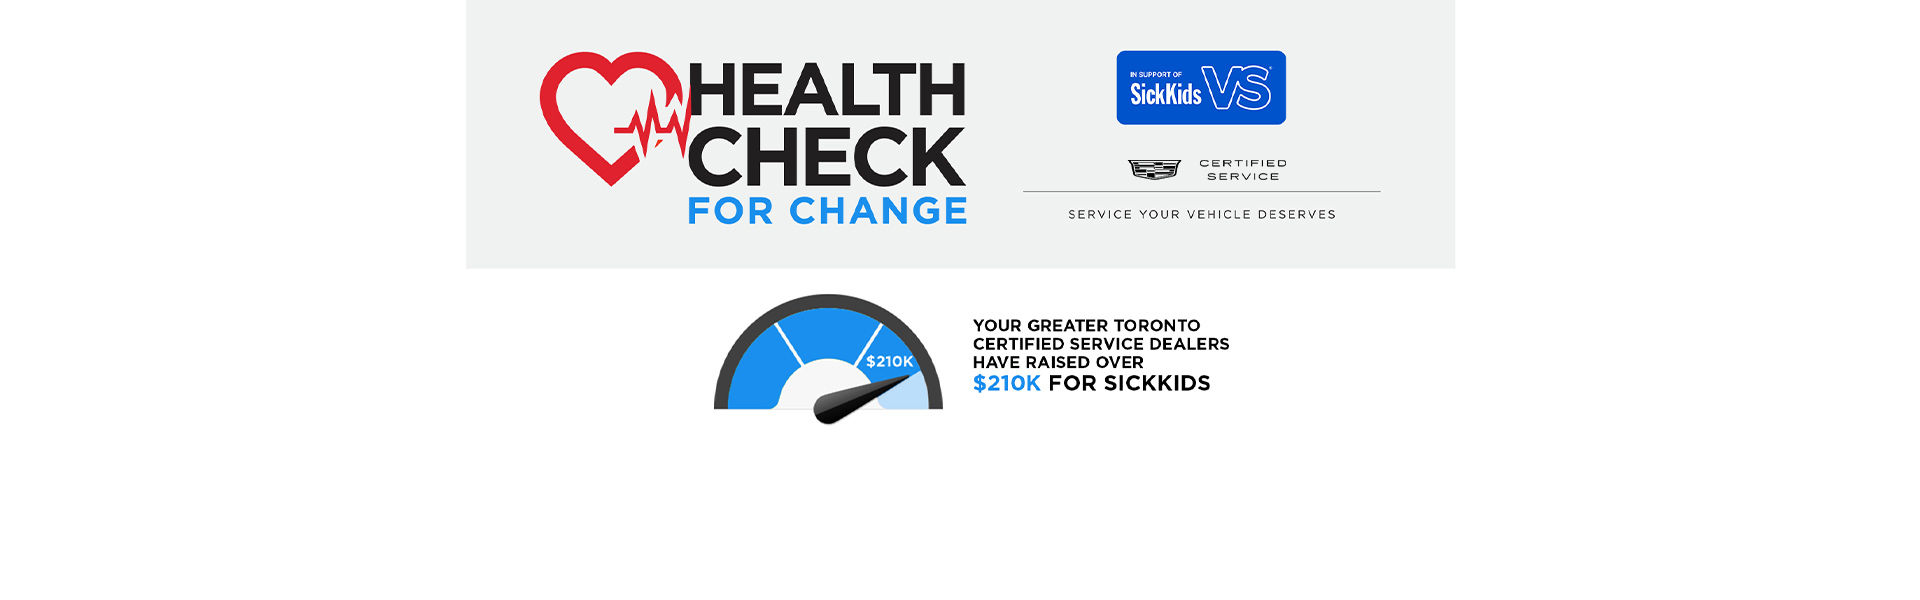 Vehicle Health Check - Generic